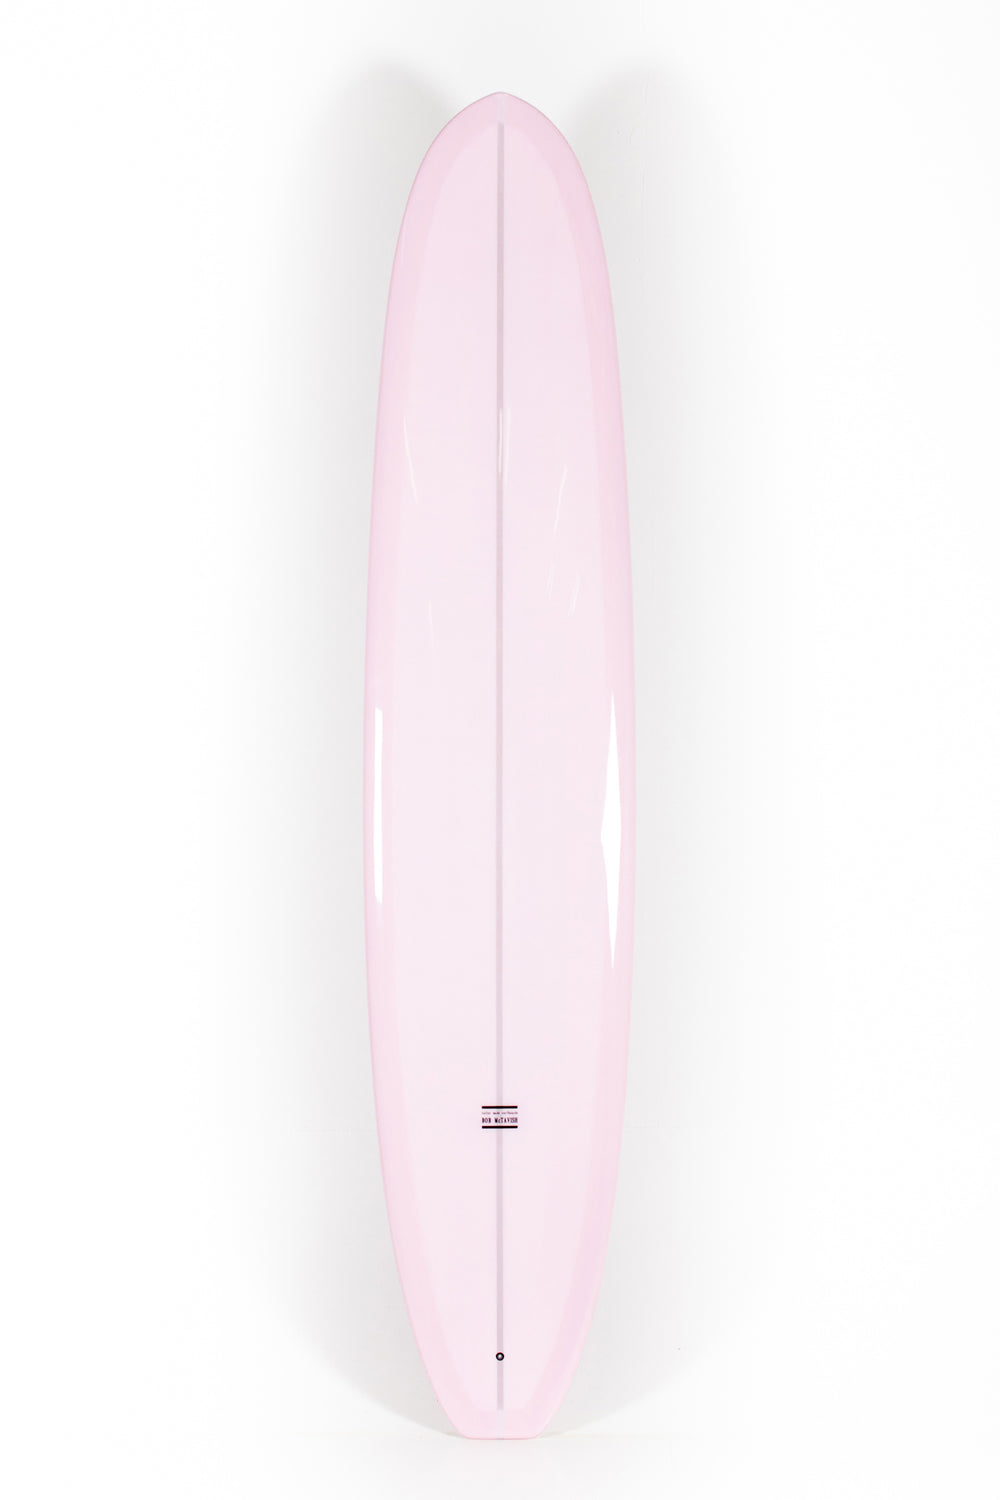 Pukas Surf Shop - McTavish Surfboard - NOOSA 66 by Bob McTavish - 9’4” x 23 x 3 - BM00744